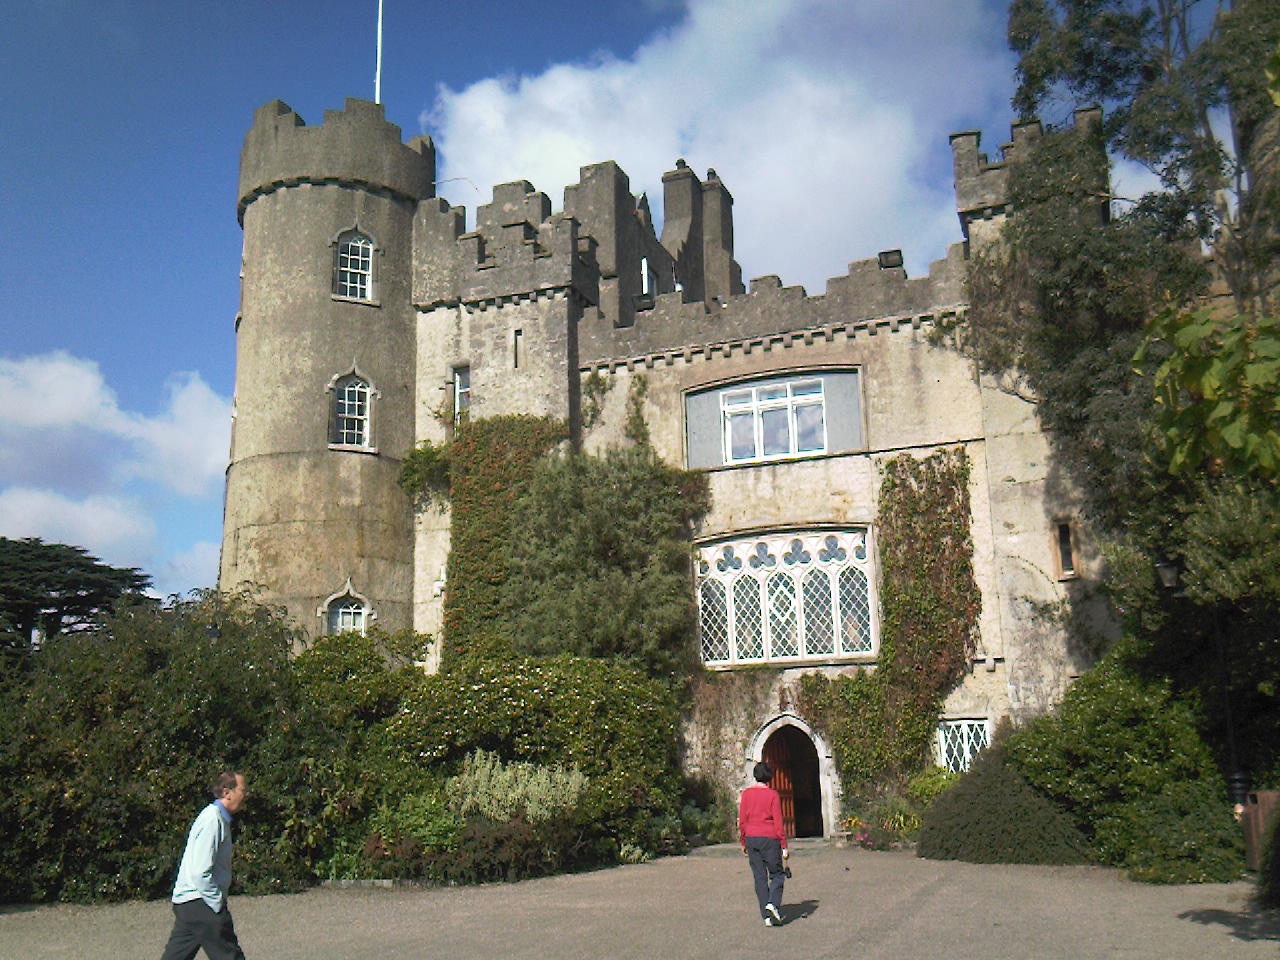 Malahide Castle, Co. Dublin